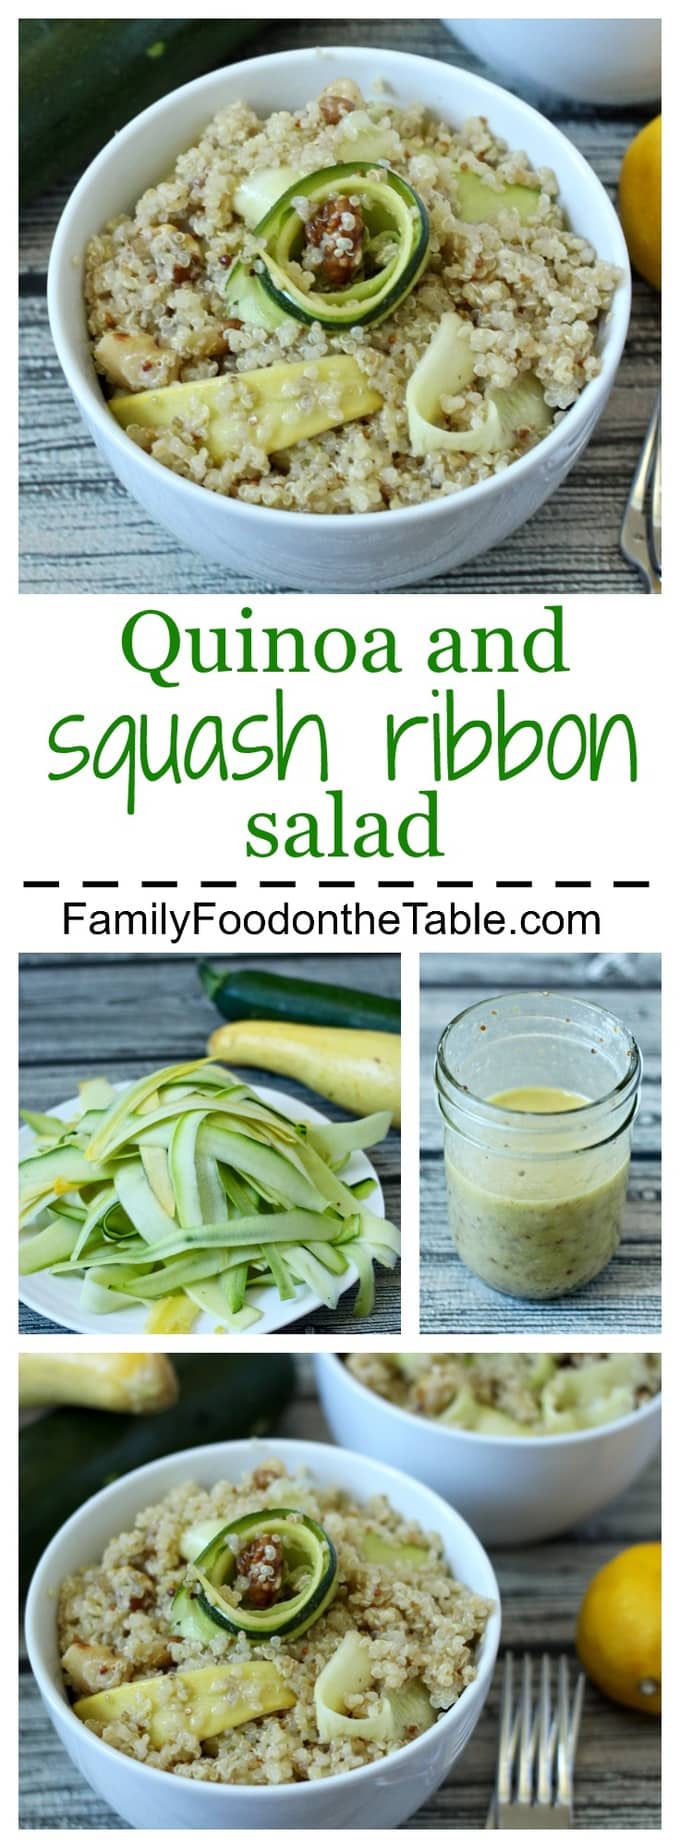 Quinoa and squash ribbon salad makes a perfect lunch, side dish or vegetarian main!